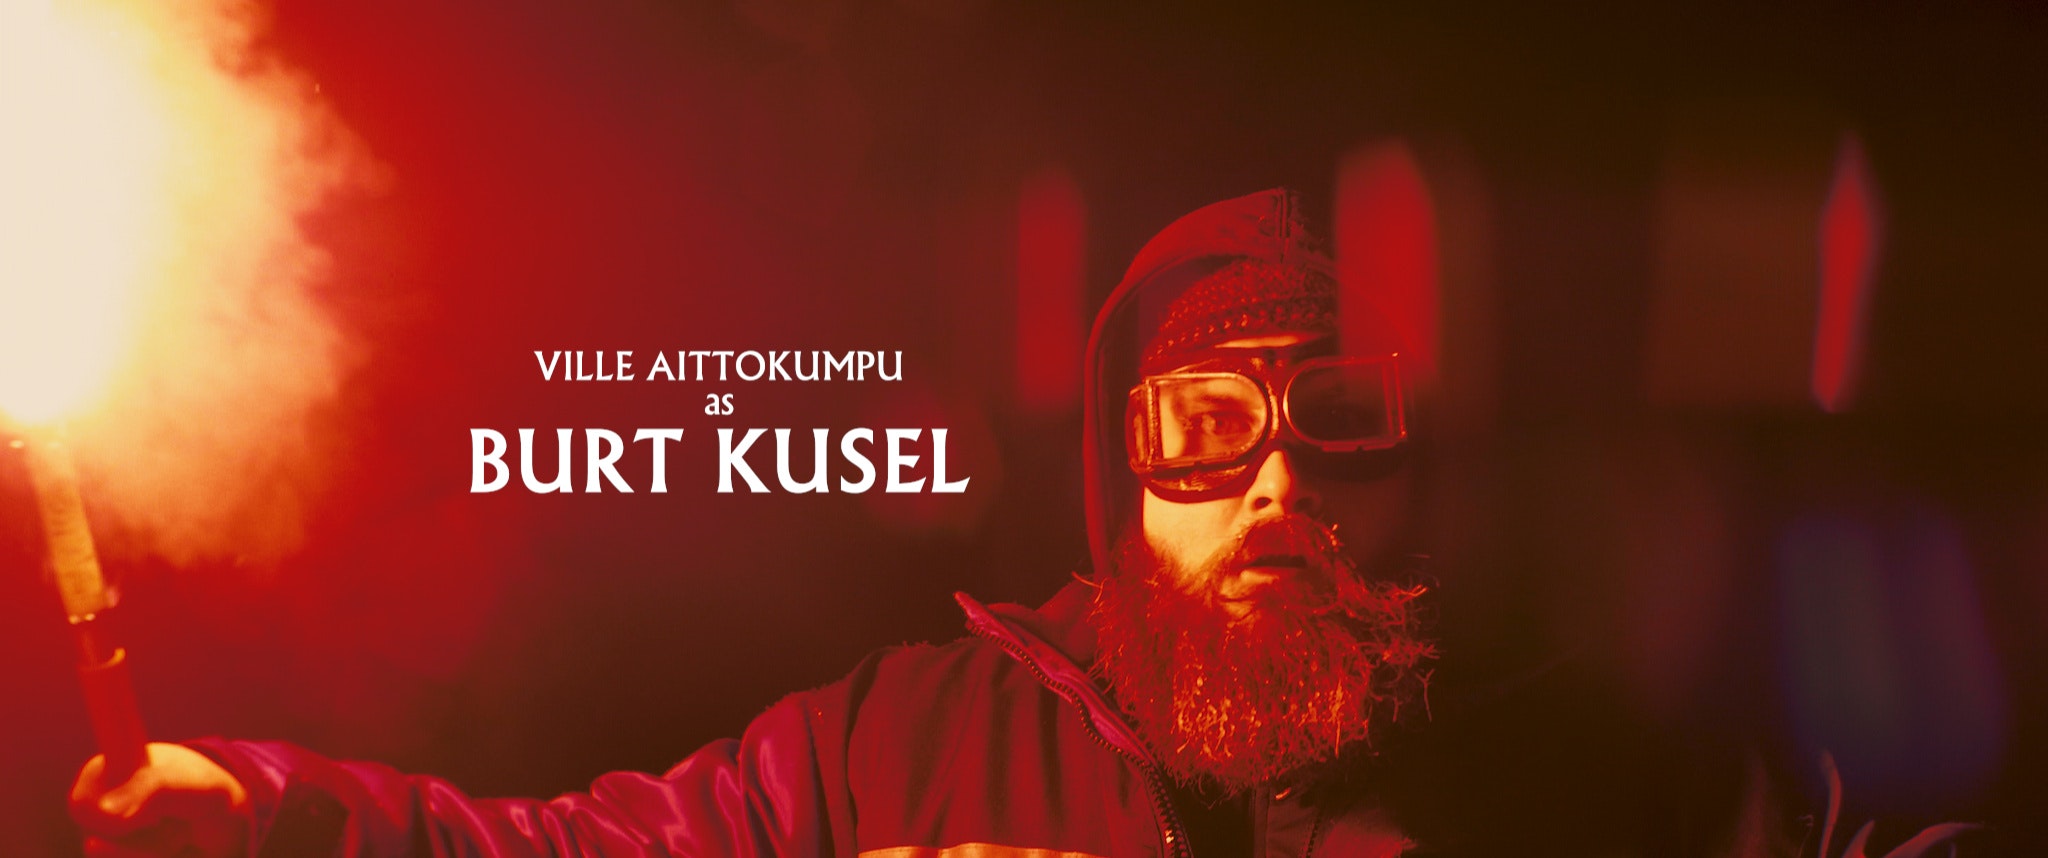 Screenshot of Burt Kusel / Ville Aittokumpu. Photo by Azh Boyzz.